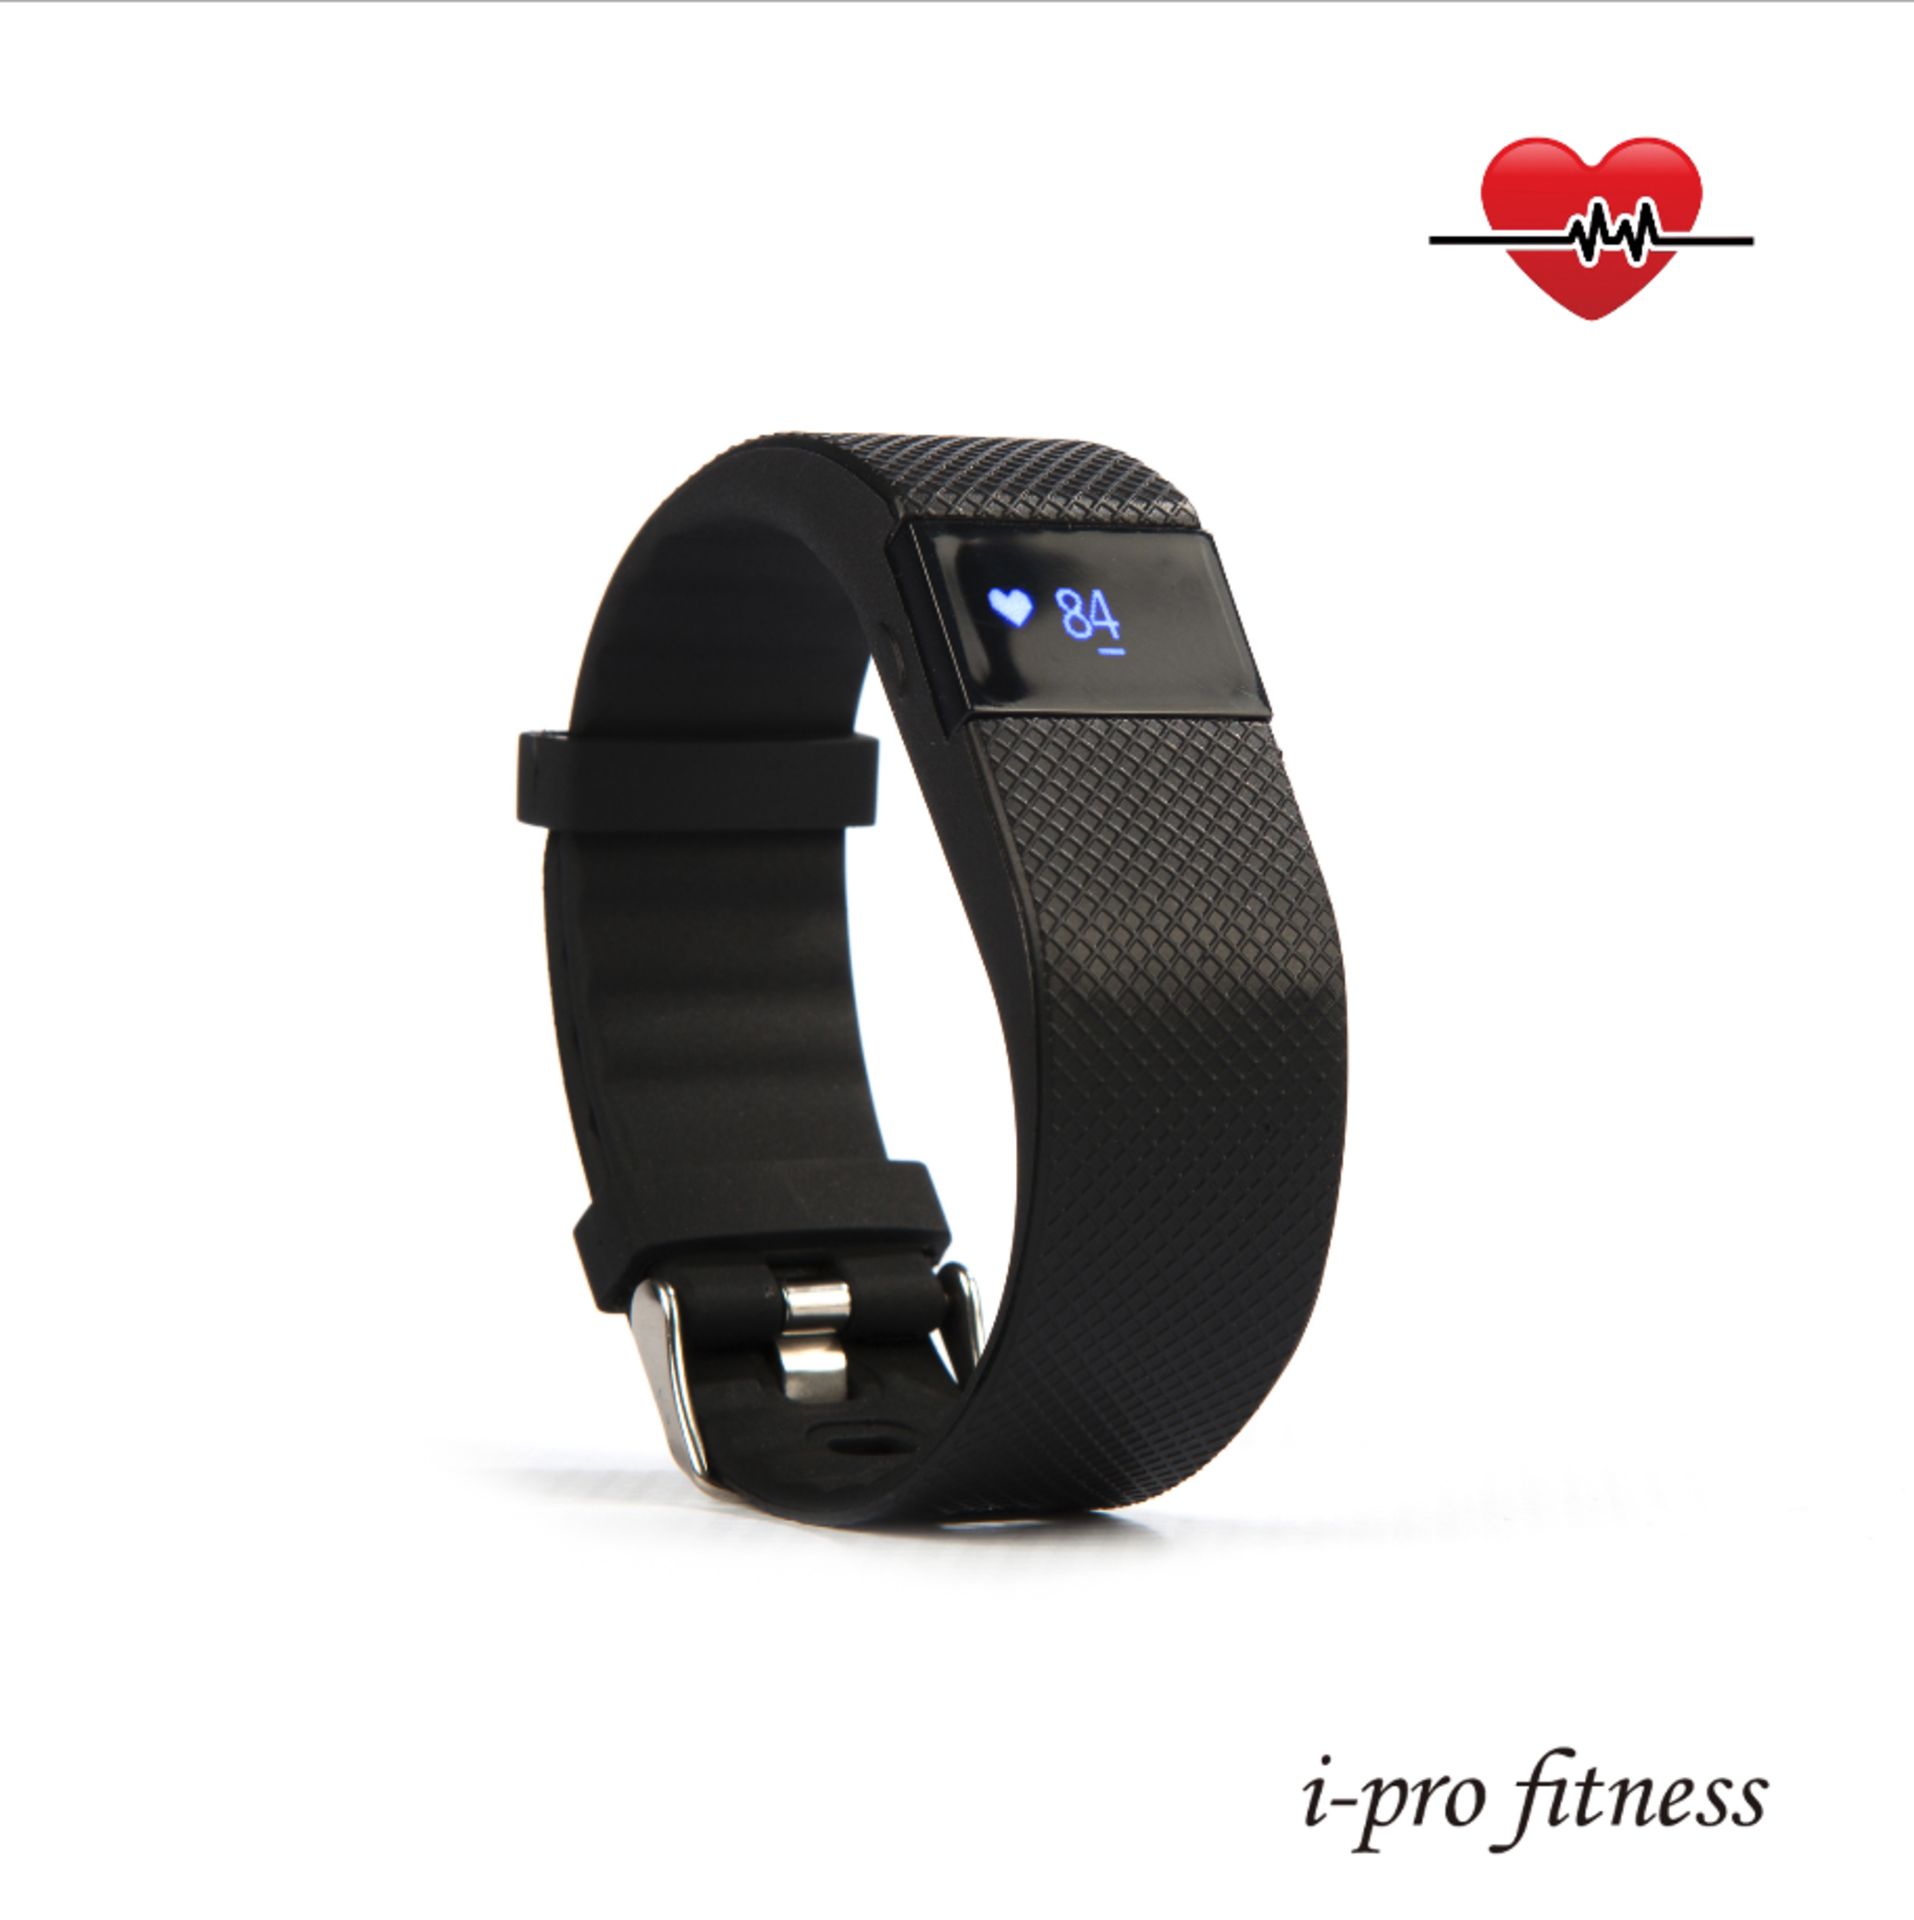 **Trade lot** 50 x Units Fitness Tracker i-pro fitness, Bluetooth 4.0 Sports Smart Bracelet - Image 2 of 8